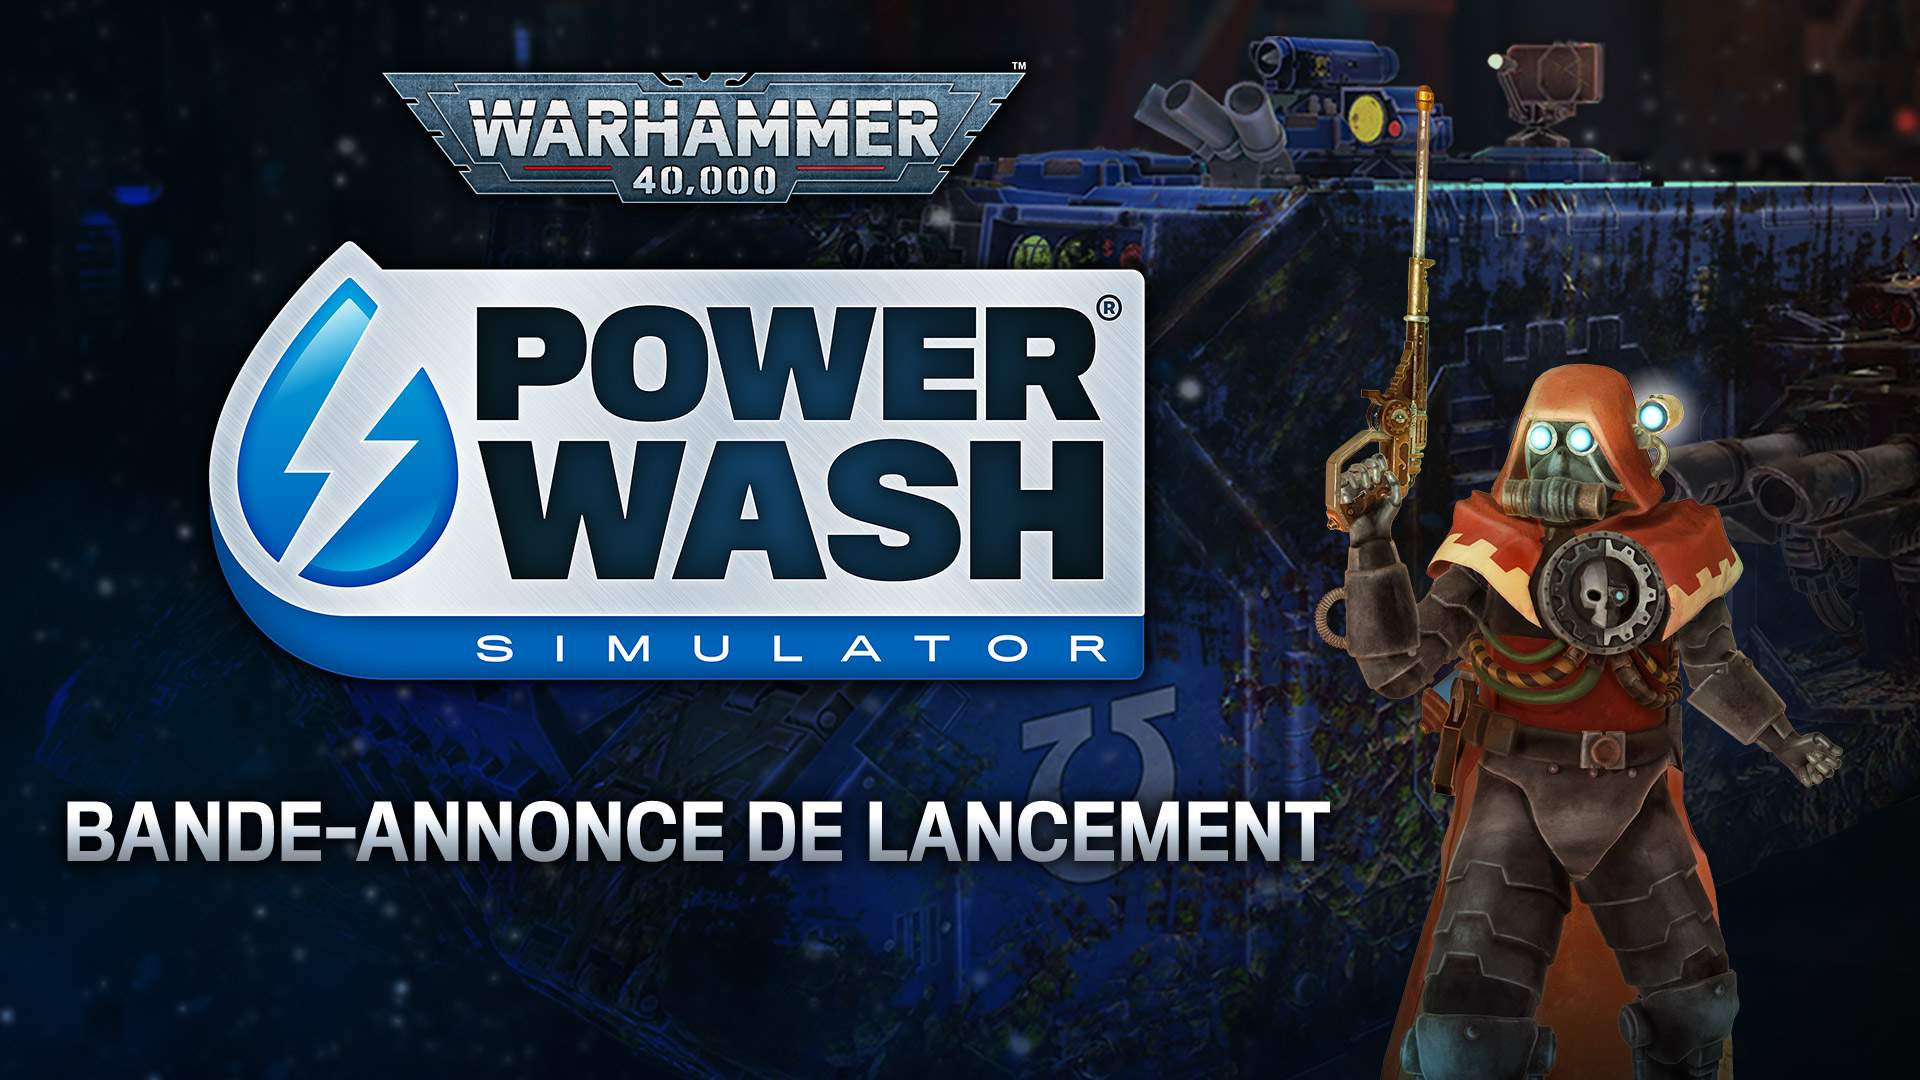 Une image affichant les logos de Warhammer 40,000 et PowerWash Simulator.